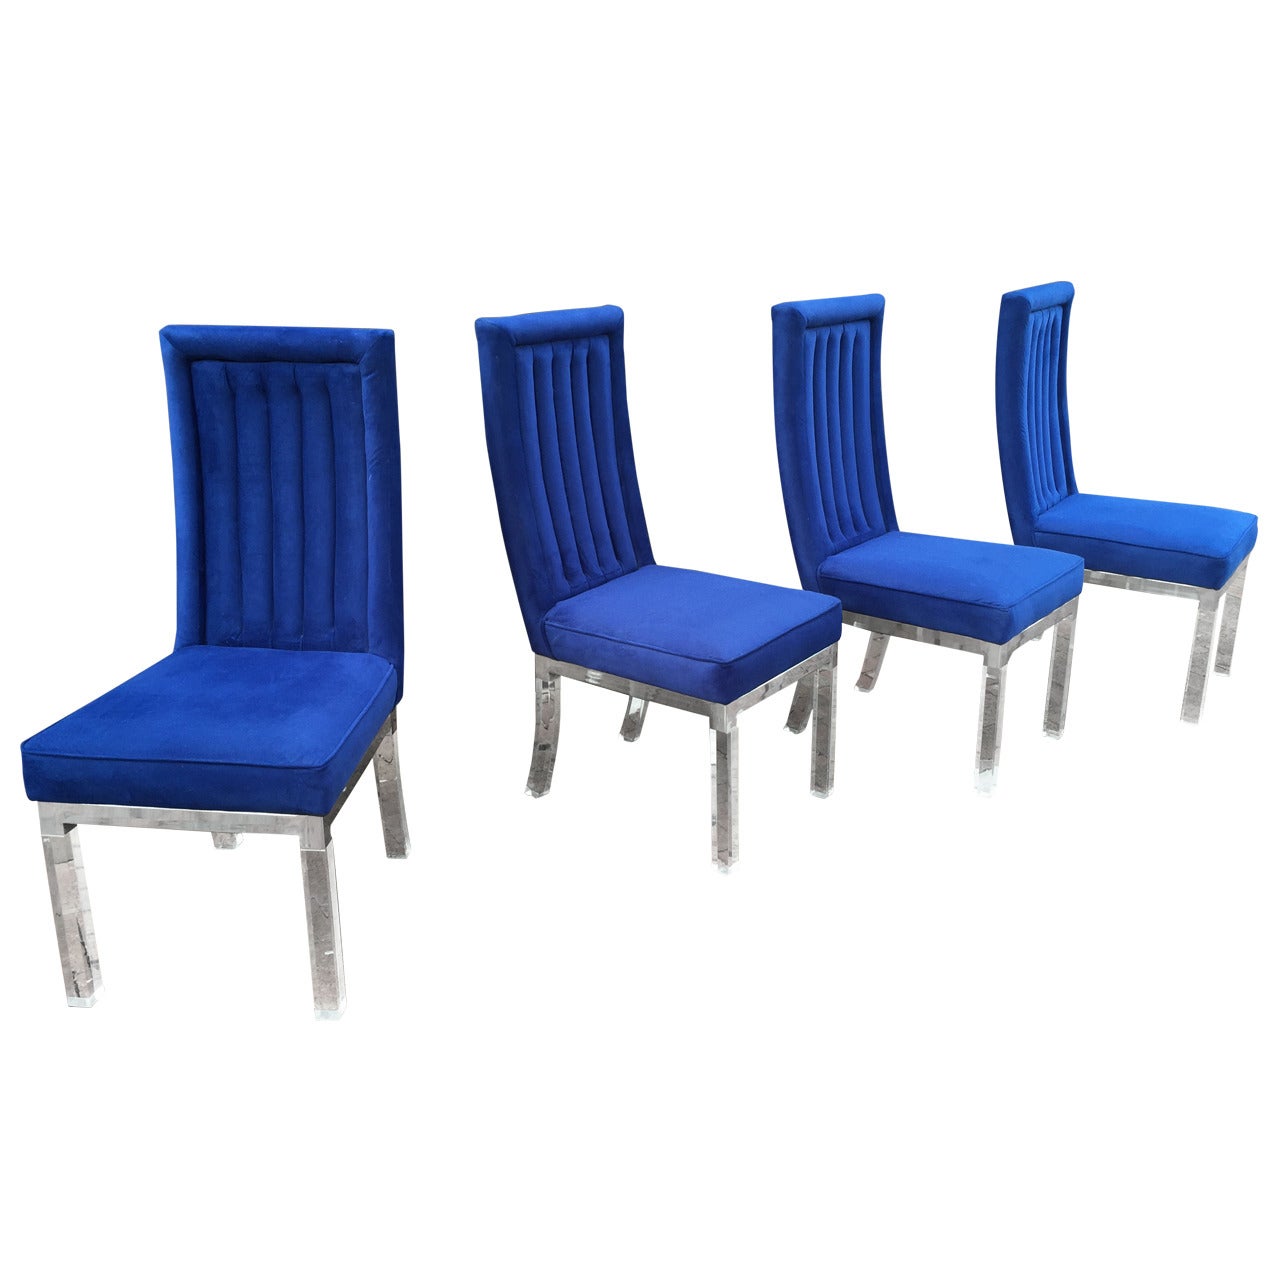 Set of Four Charles Hollis Jones Dining Chairs